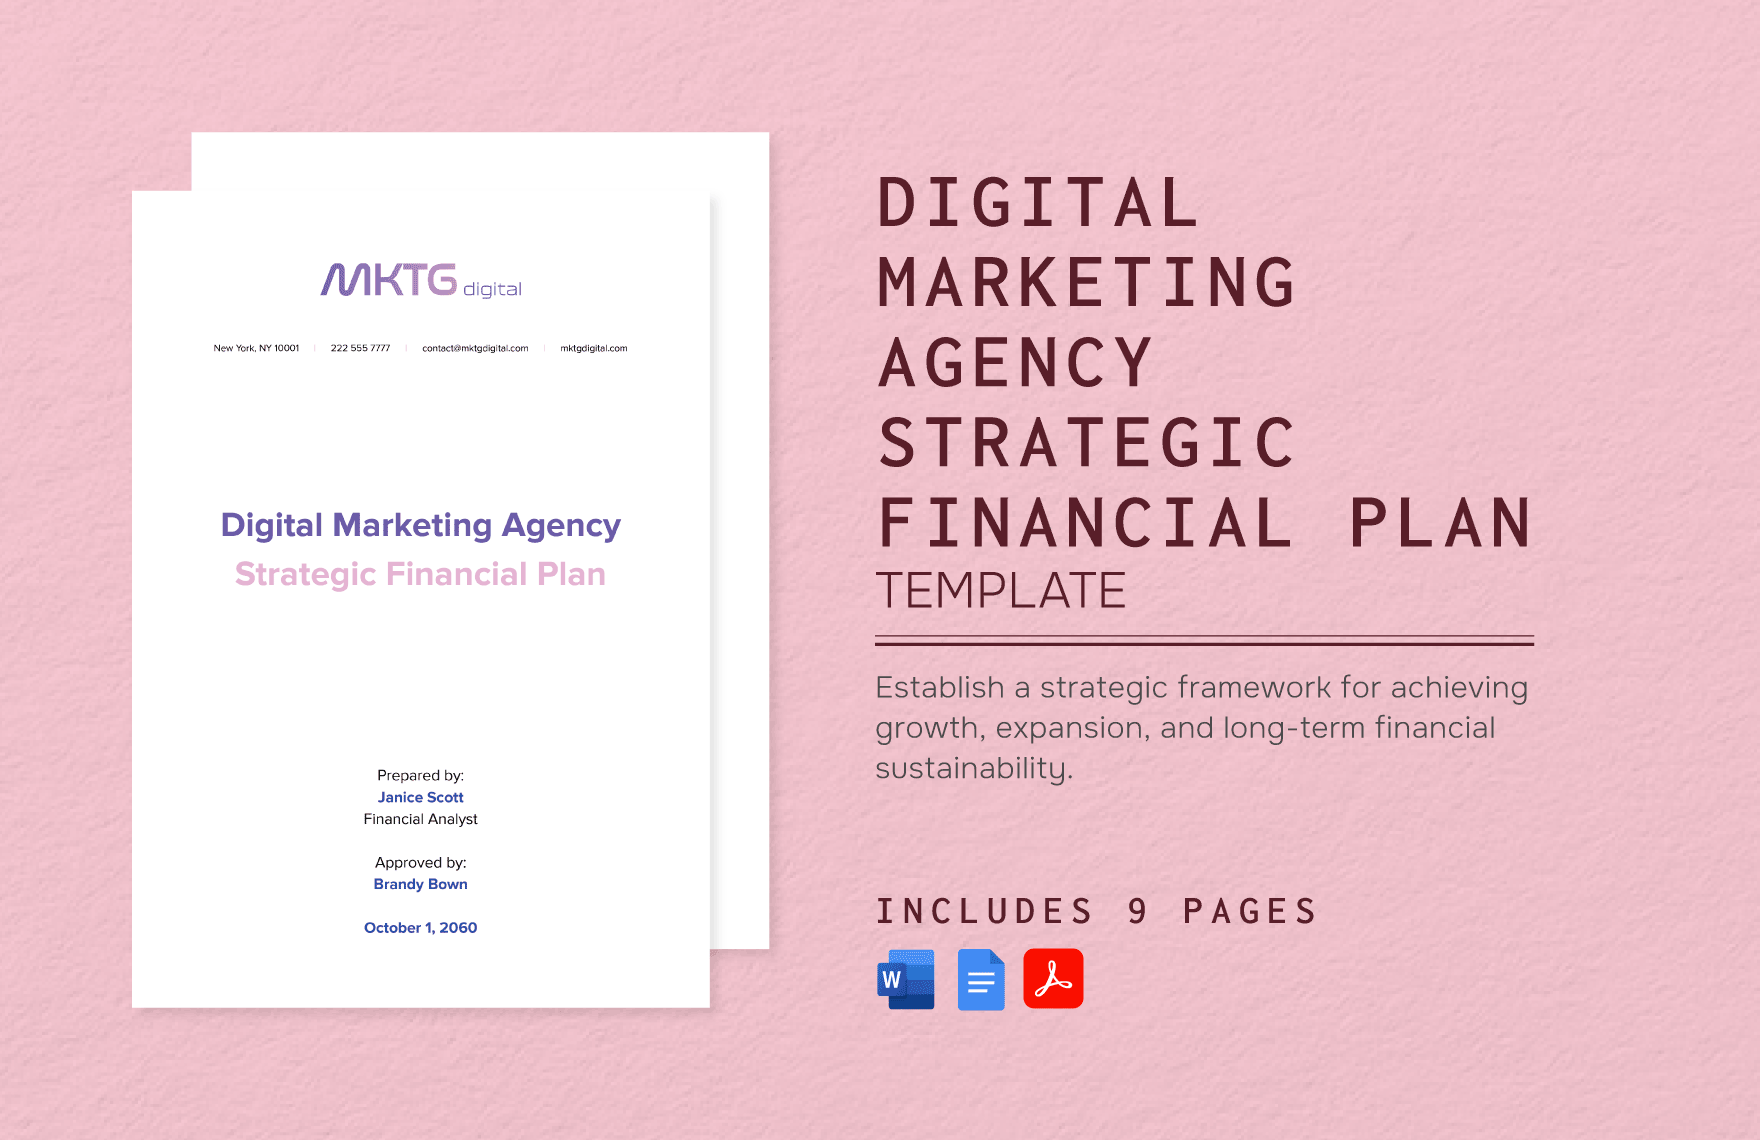 Digital Marketing Agency Strategic Financial Plan Template